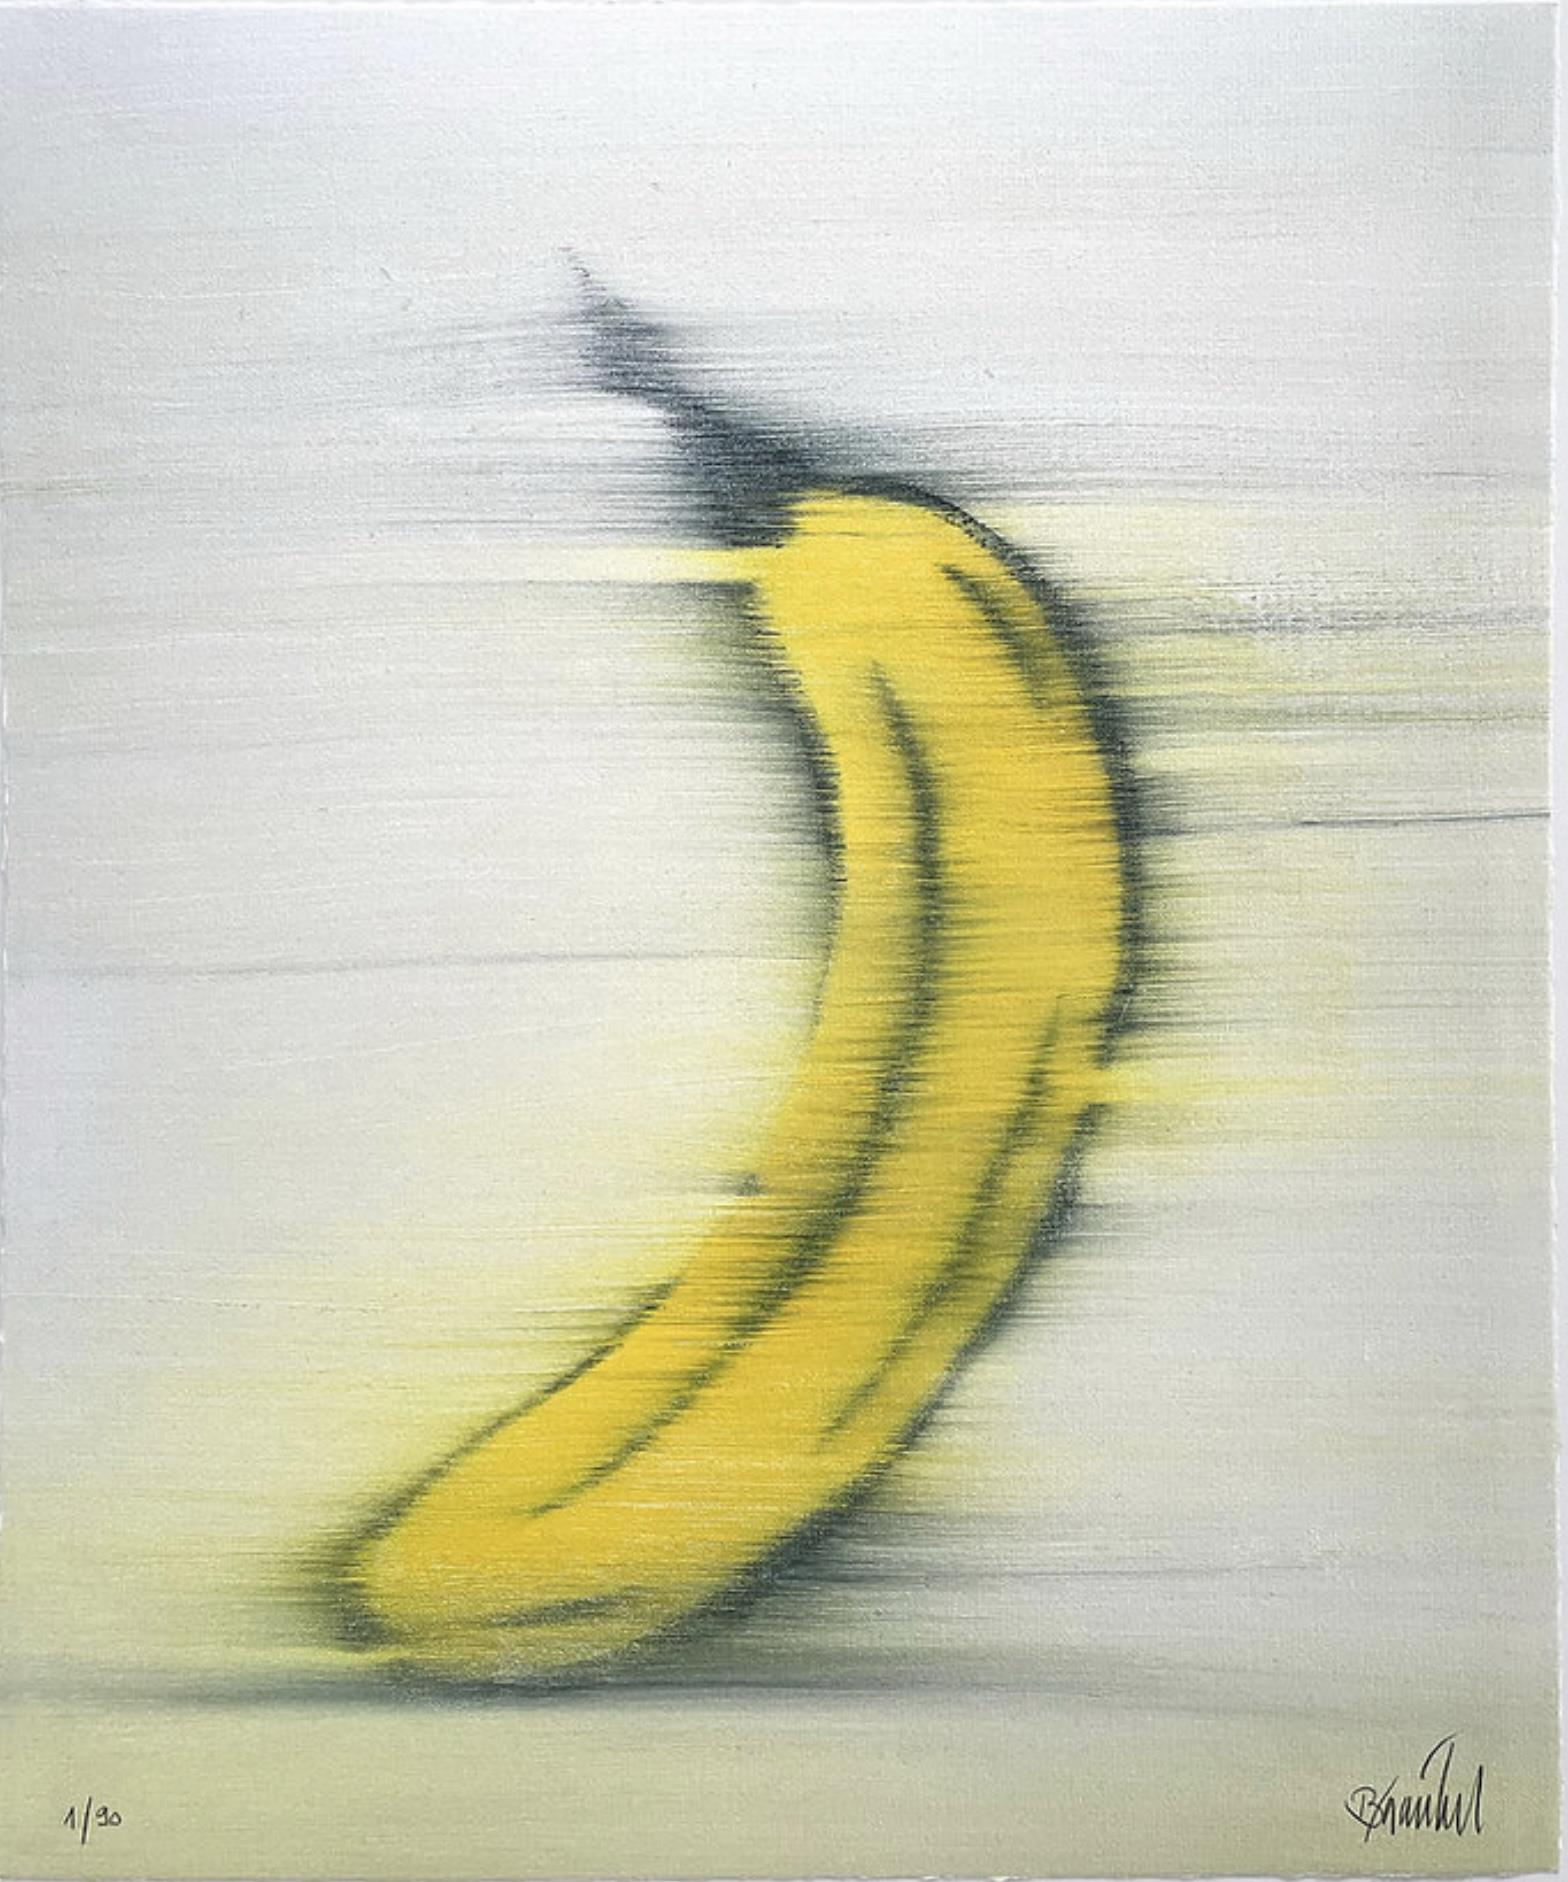 Richter-Banane - Baumgärtel, Thomas - k-2203BT6